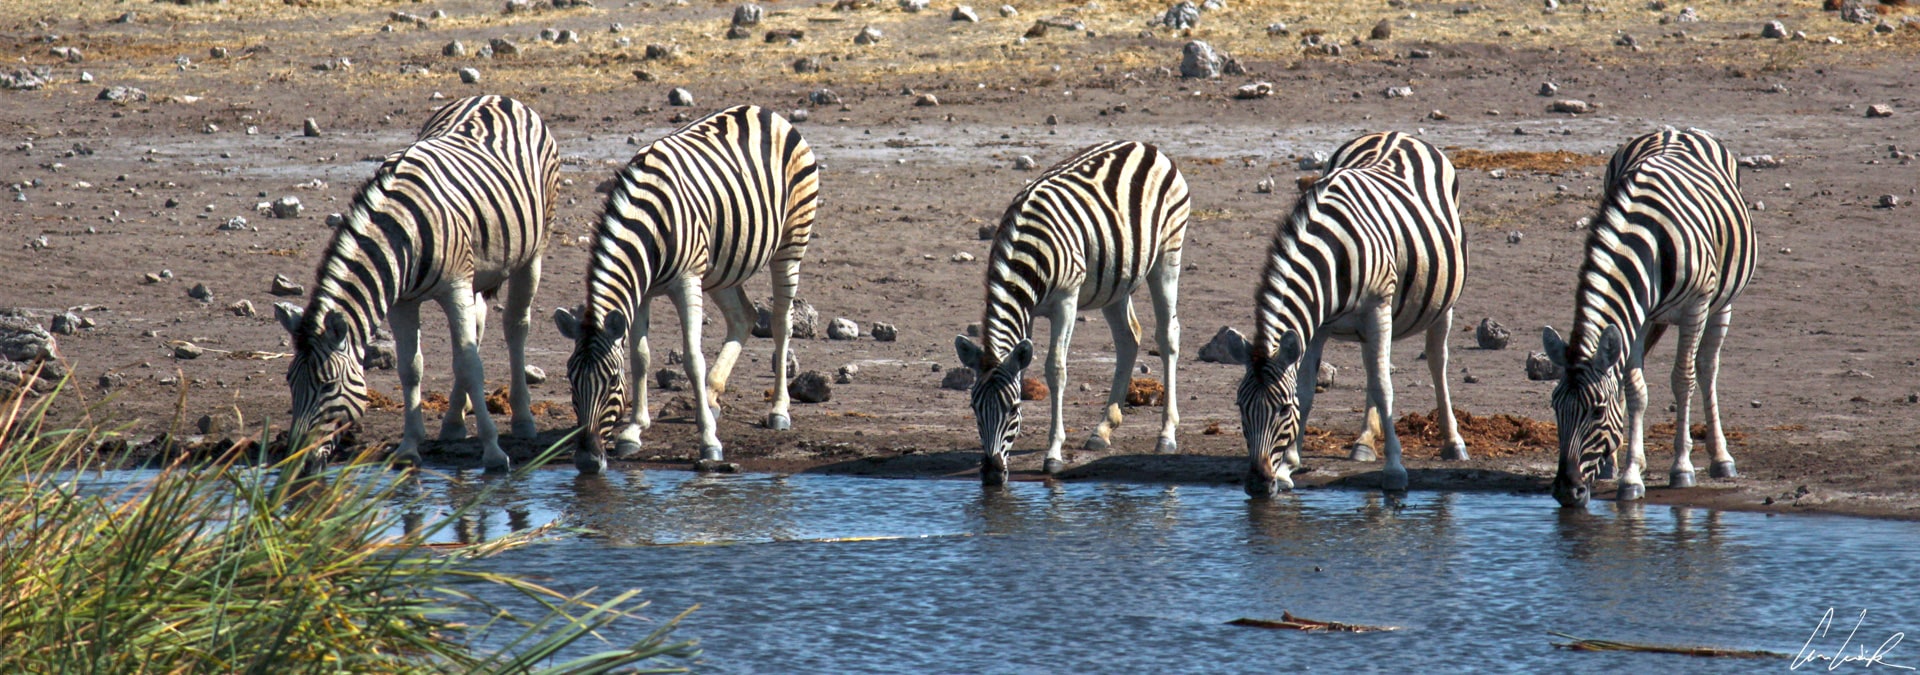 A glimpse of Etosha National Park